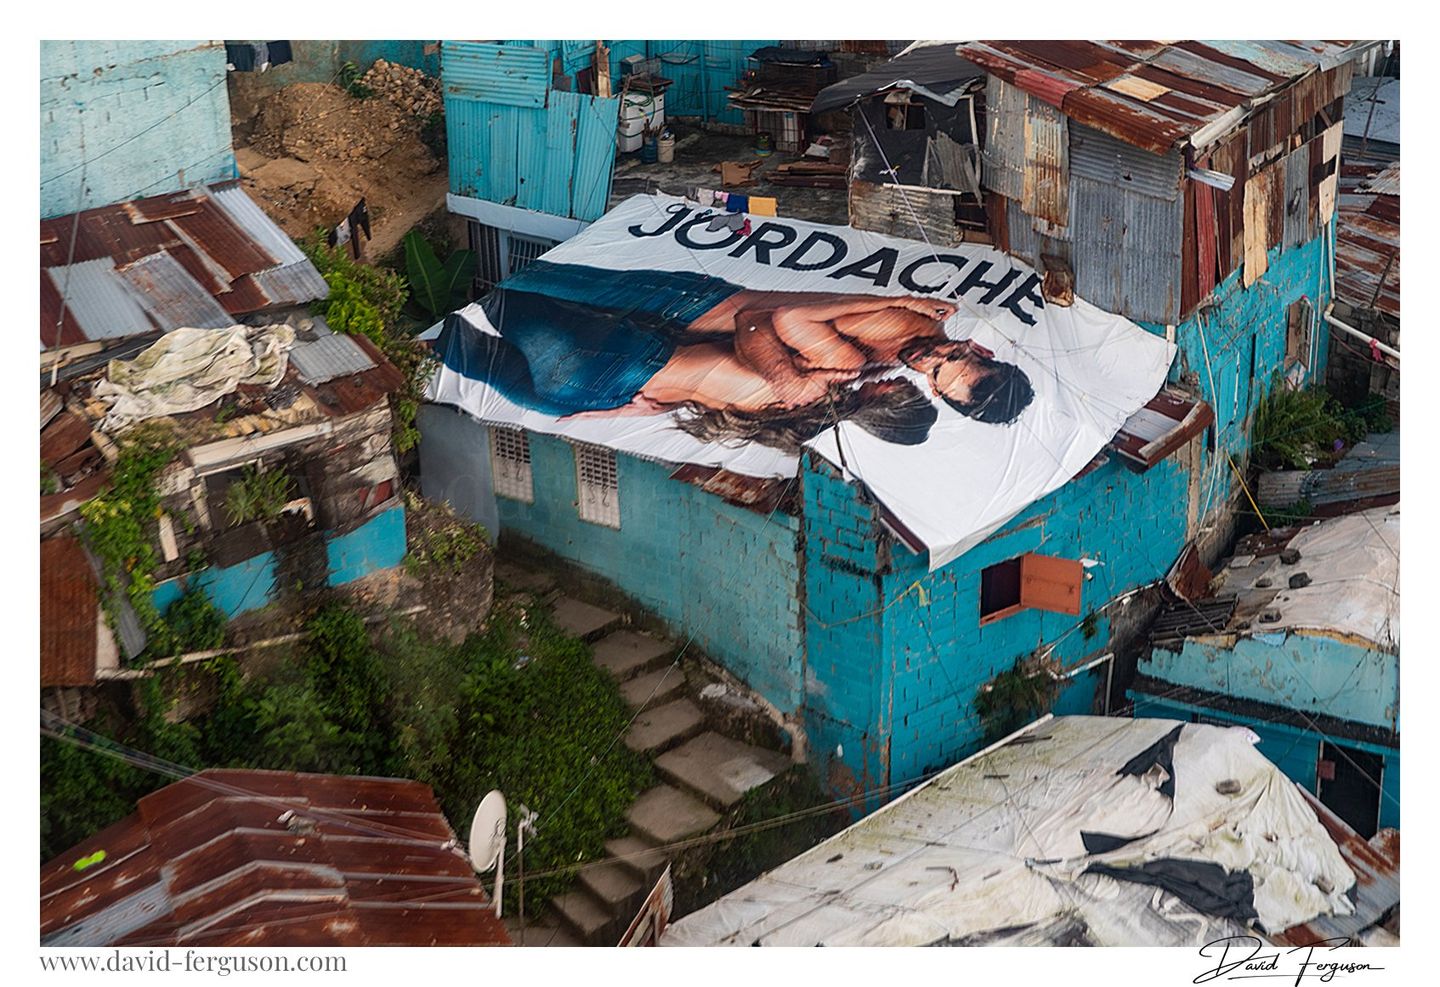 Santo Domingo from Above  Photo Gallery by David Ferguson